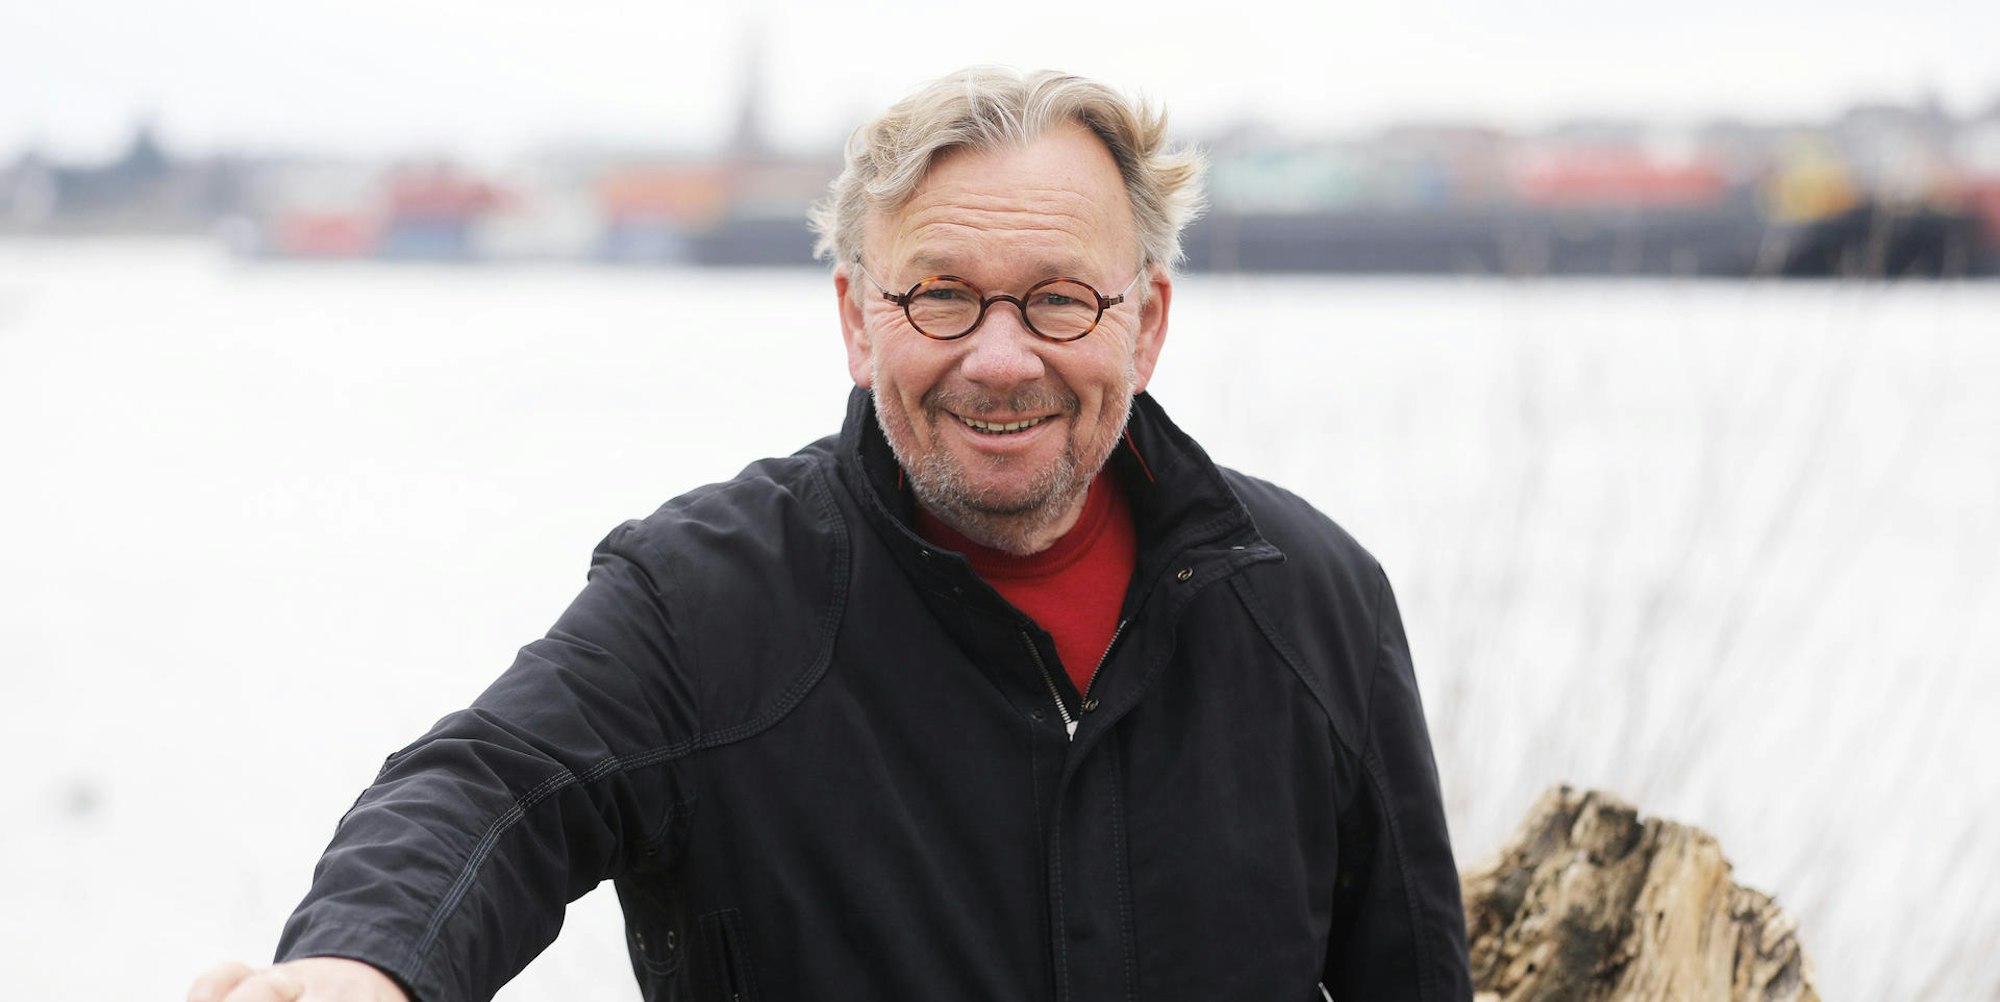 Bernd Stelter